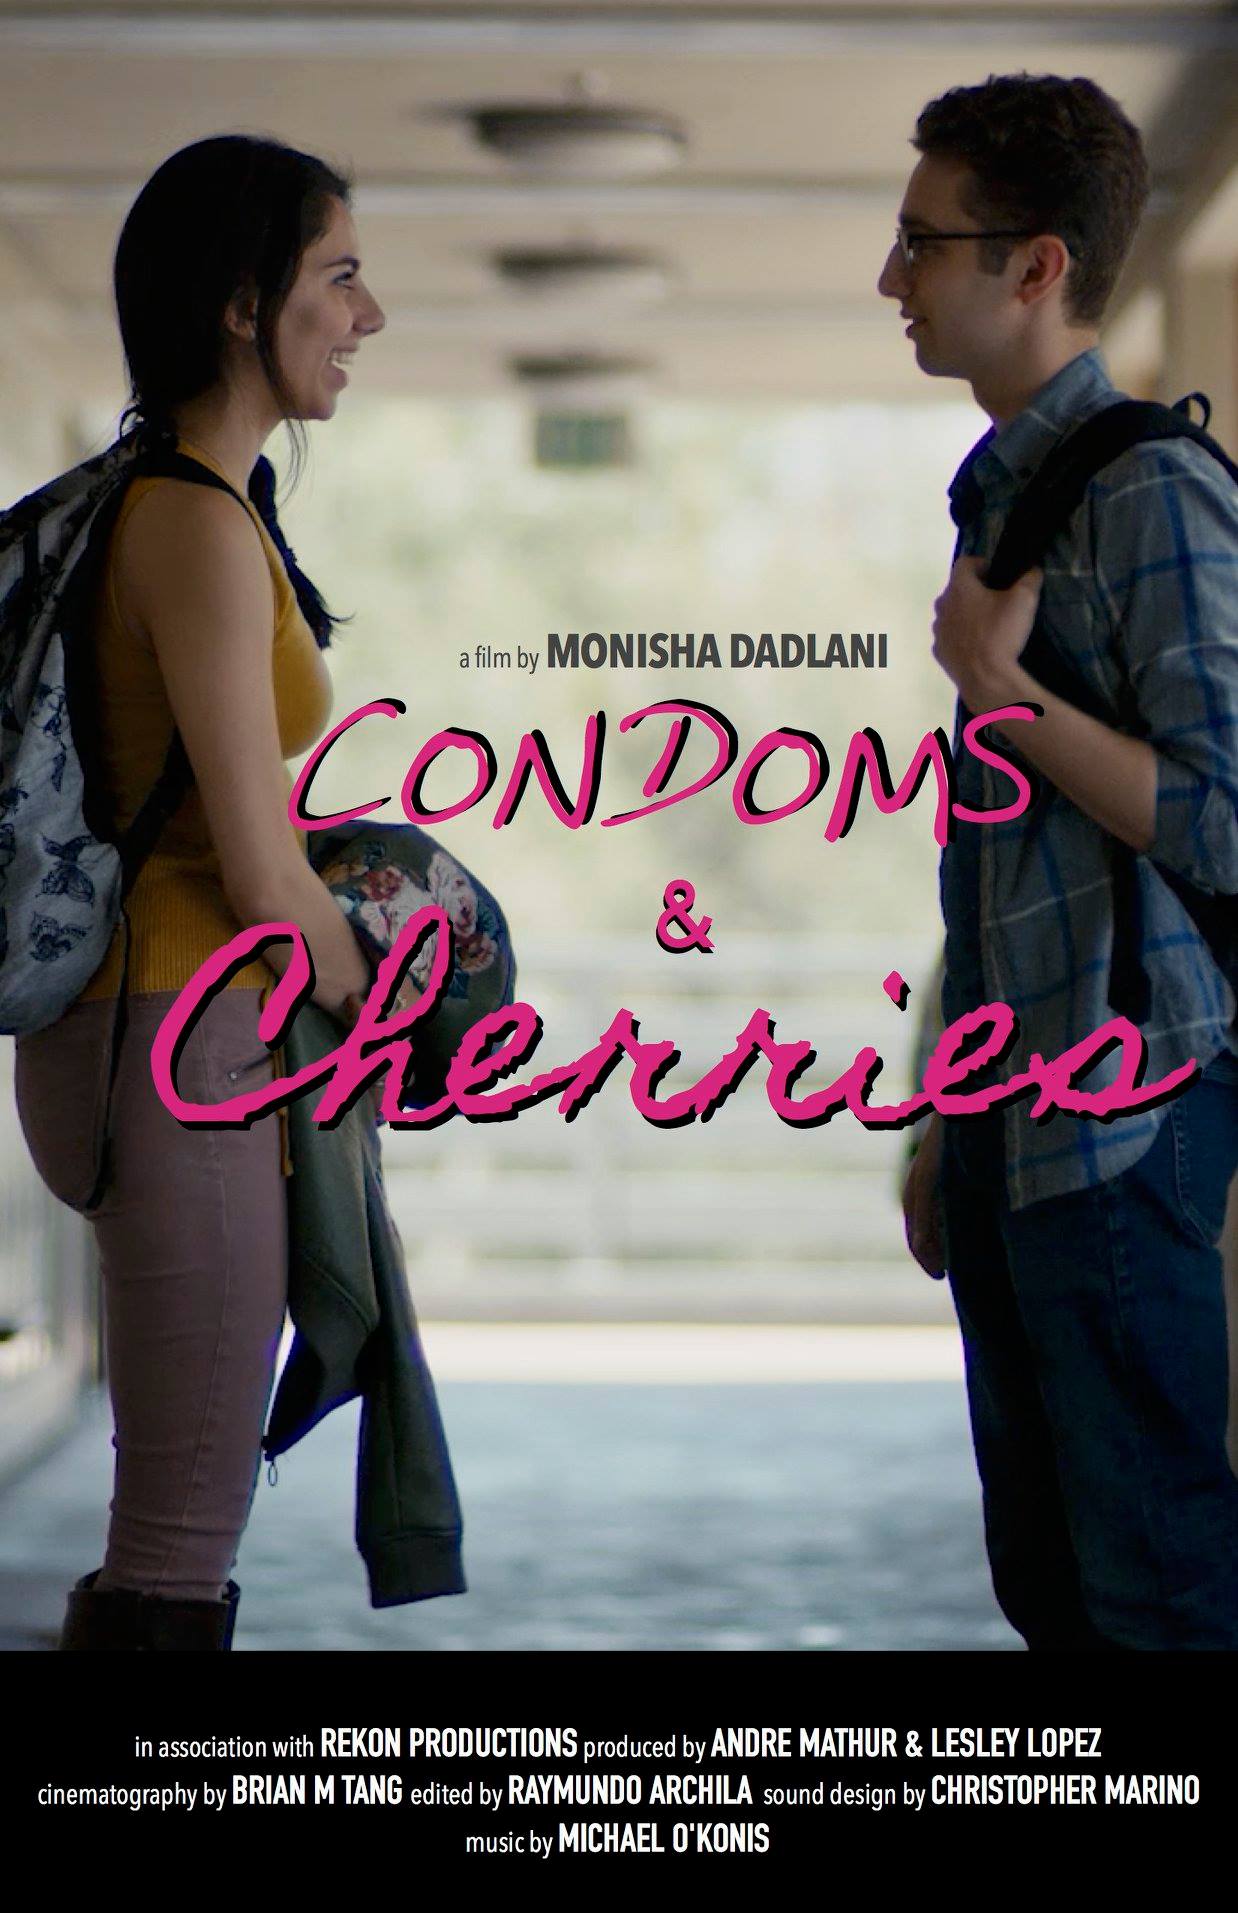 Condoms & Cherries